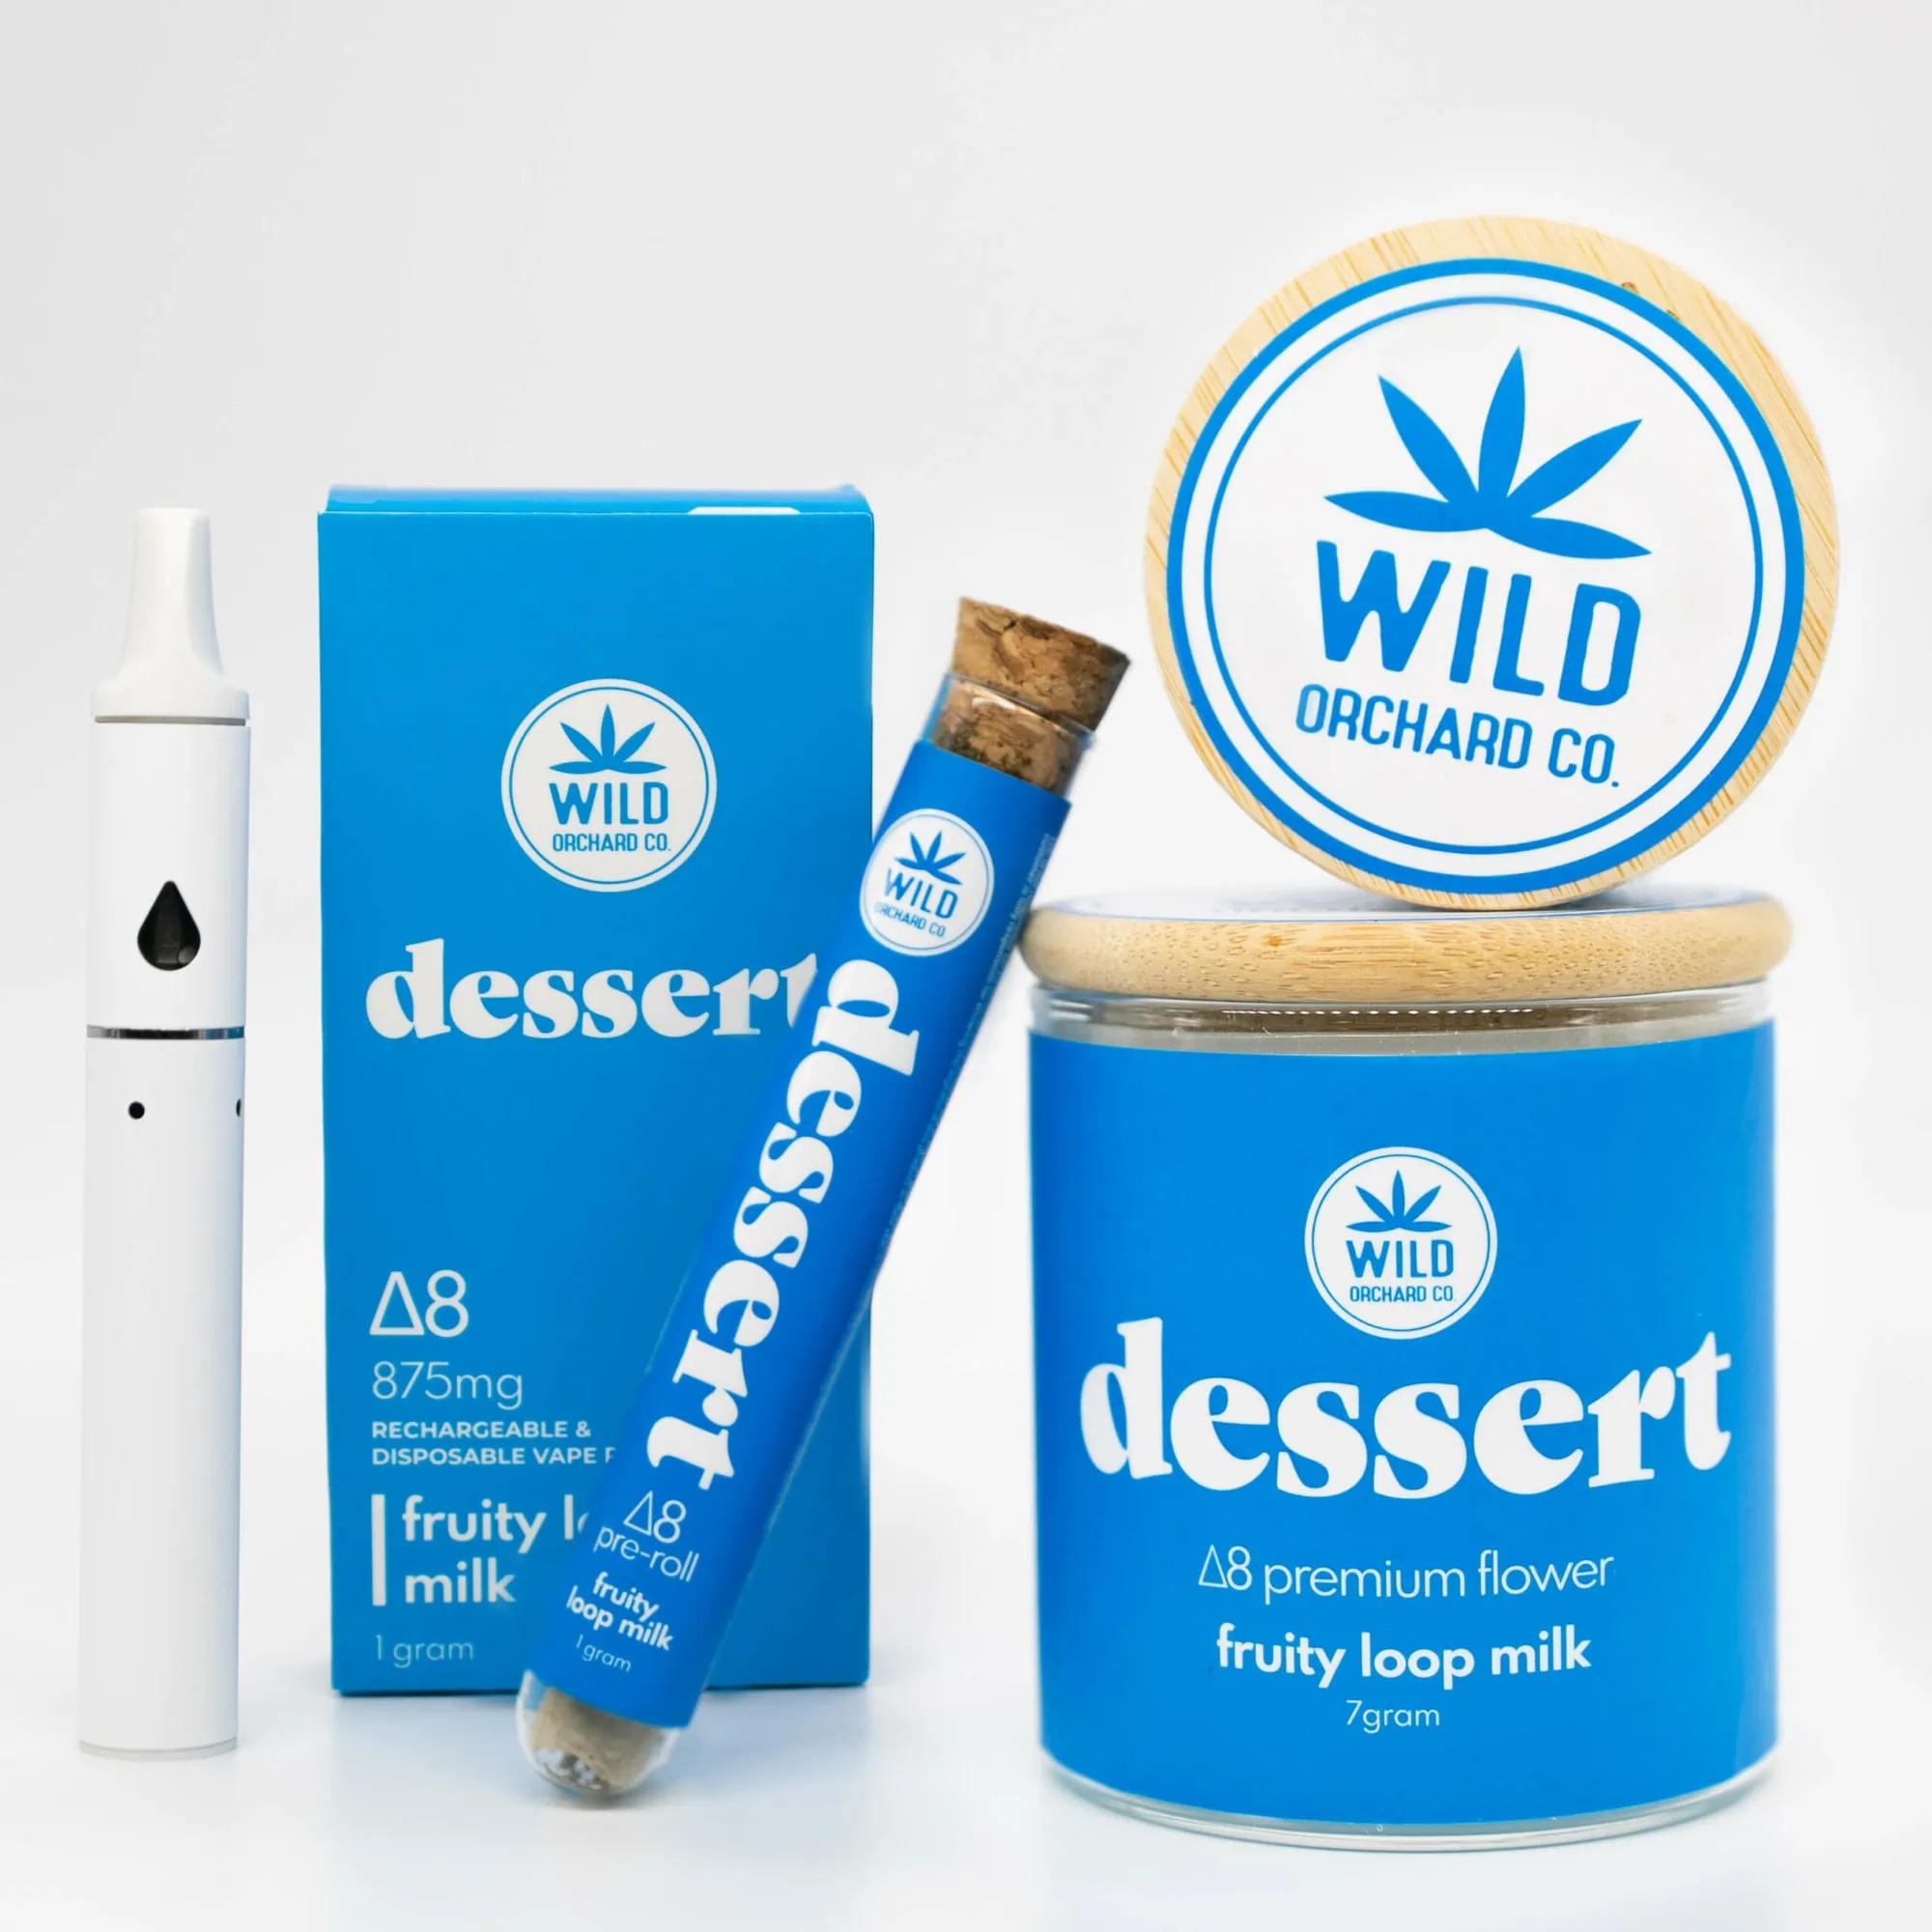 Wild organic Delta 8 Flavored Pre Roll "Fruity Loop Milk" dessert vape kit.